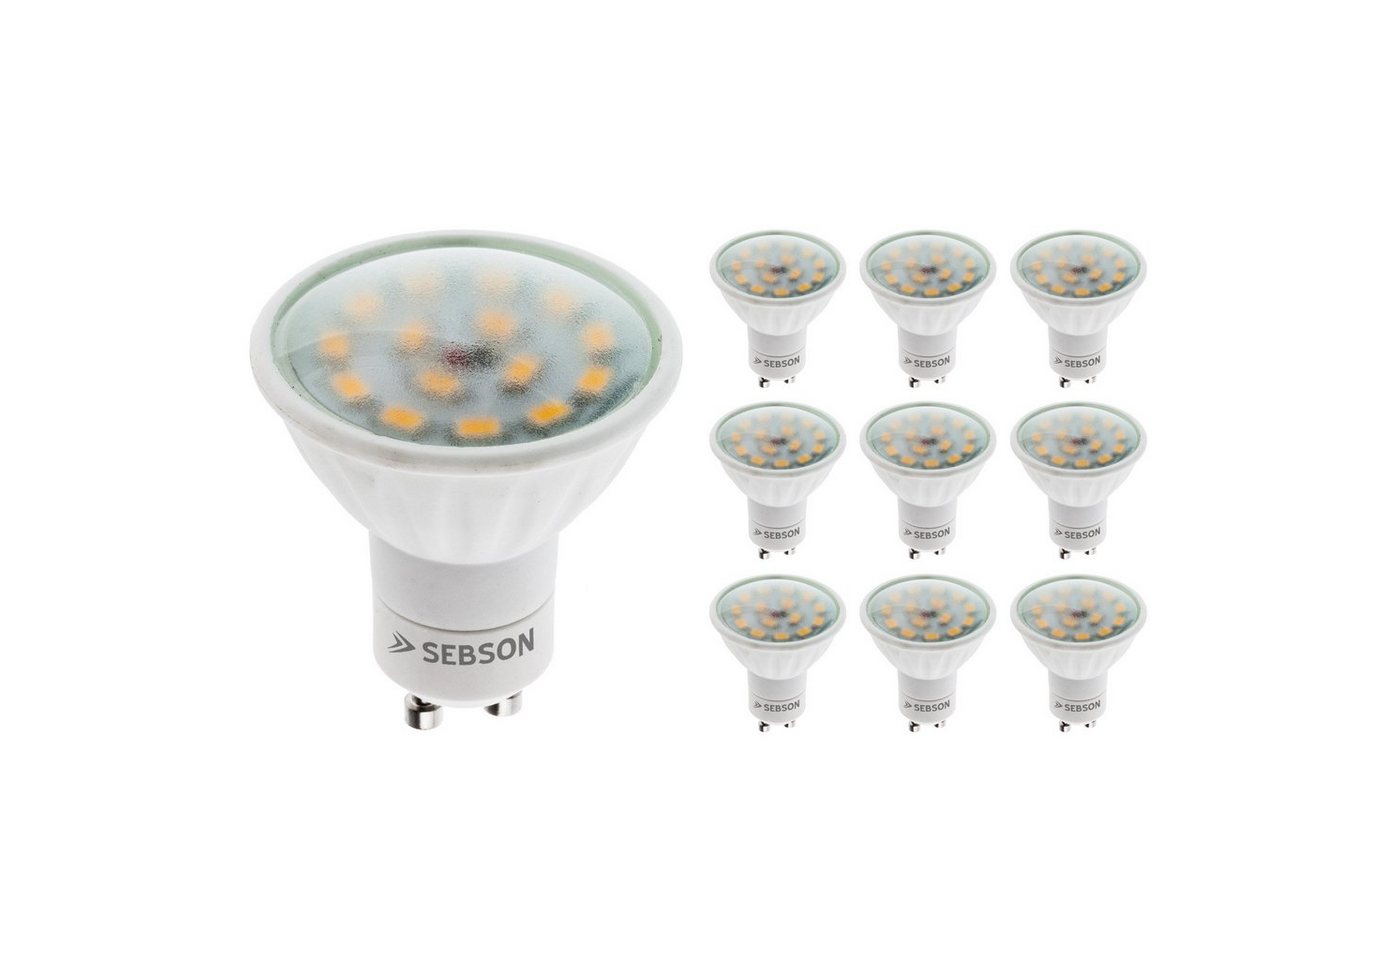 SEBSON LED-Leuchtmittel LED Lampe GU10 warmweiß 5W Strahler 230V Leuchtmittel, GU10, 10 St., Warmweiß, Einbaustrahler 230V von SEBSON